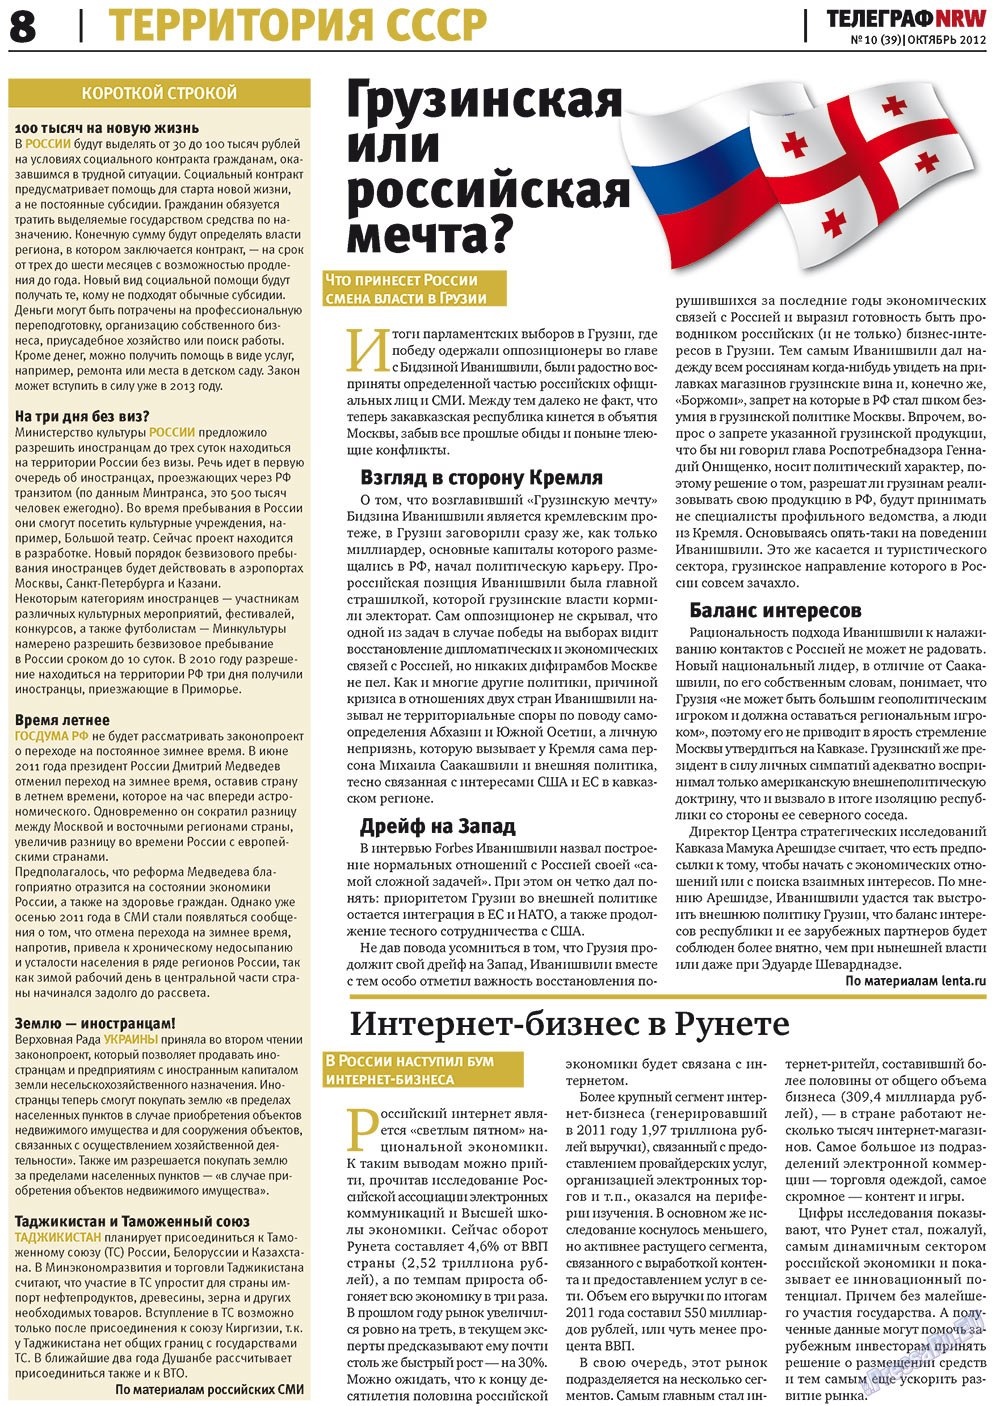 Телеграф NRW, газета. 2012 №10 стр.8